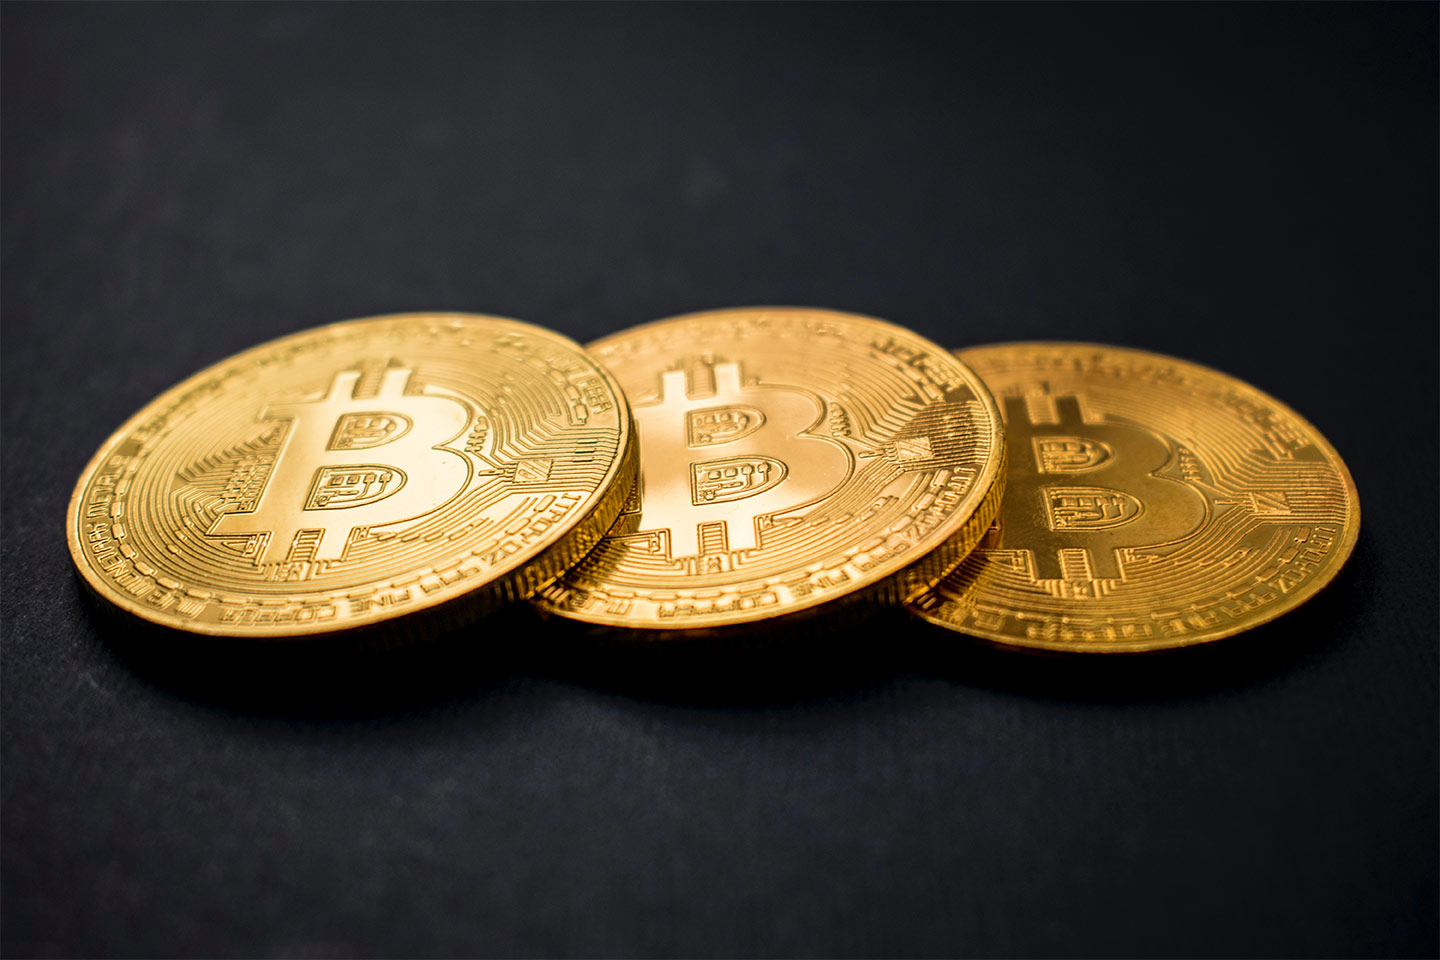 10 bitcoins worth